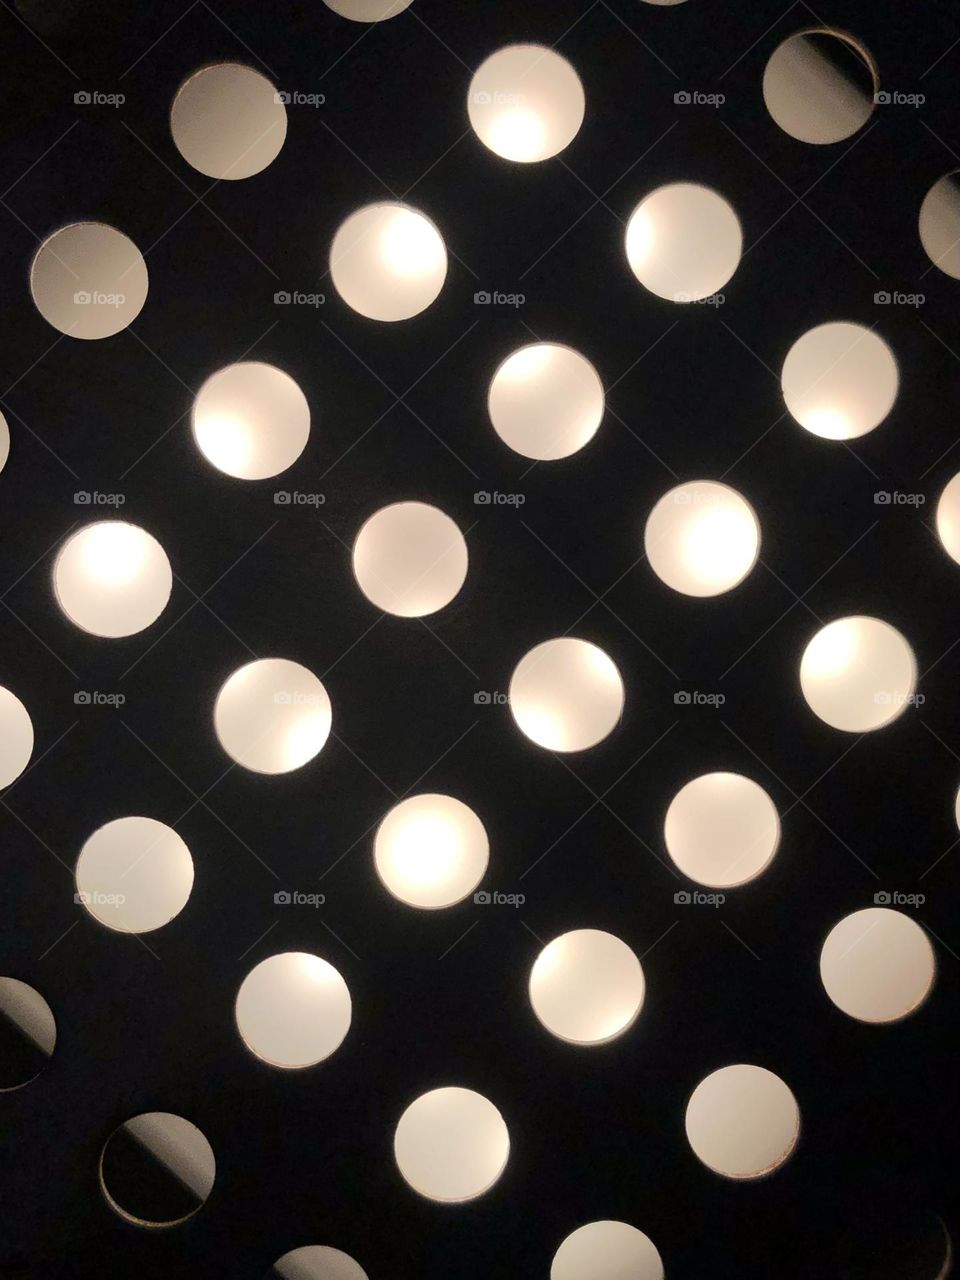 Polka dots of light on a coffee maker drip pan